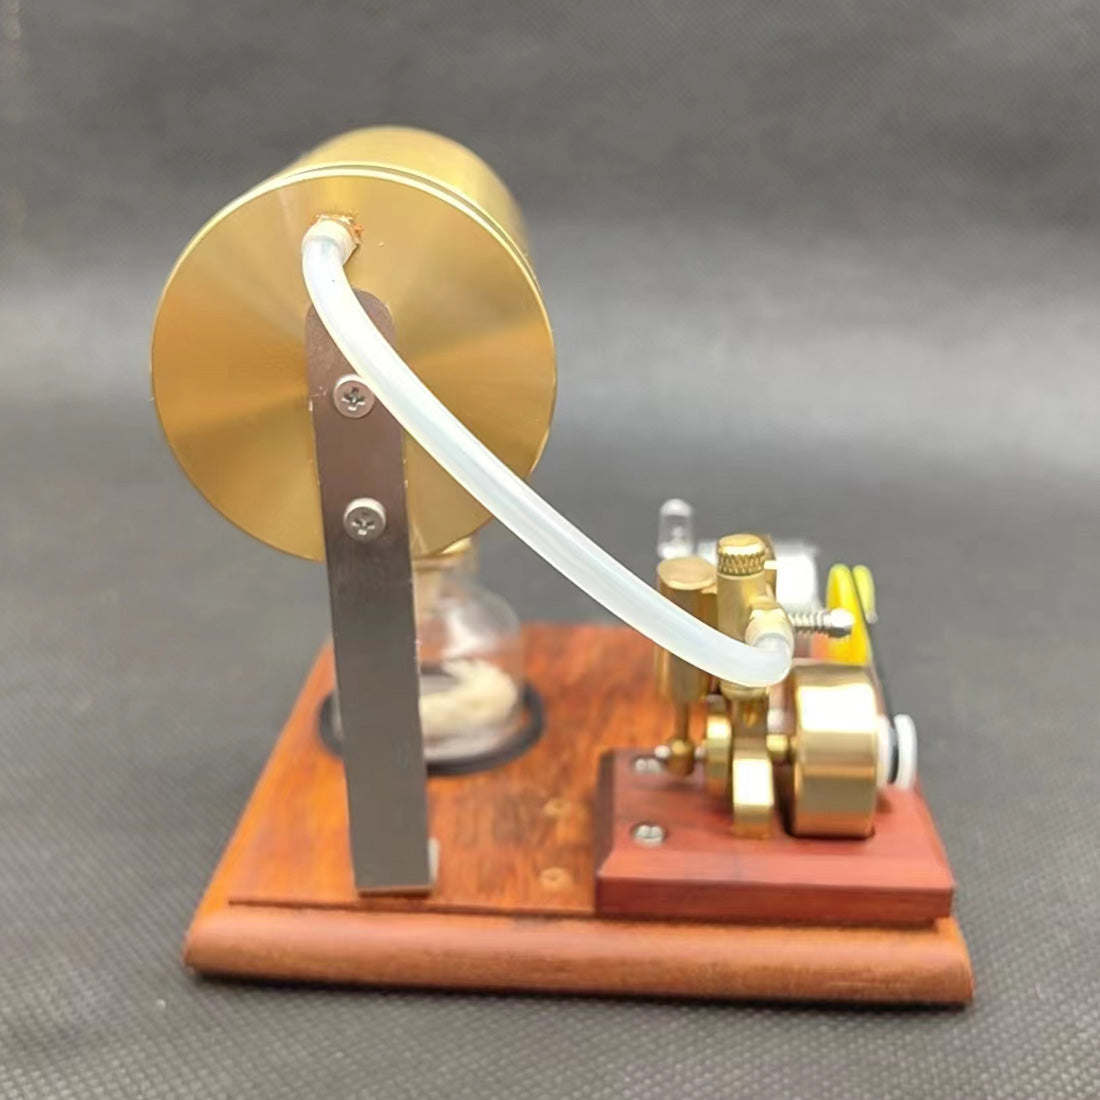 Mini Oscillating Steam Engine & Generator Model Steam-powered Mechanical Set enginediyshop